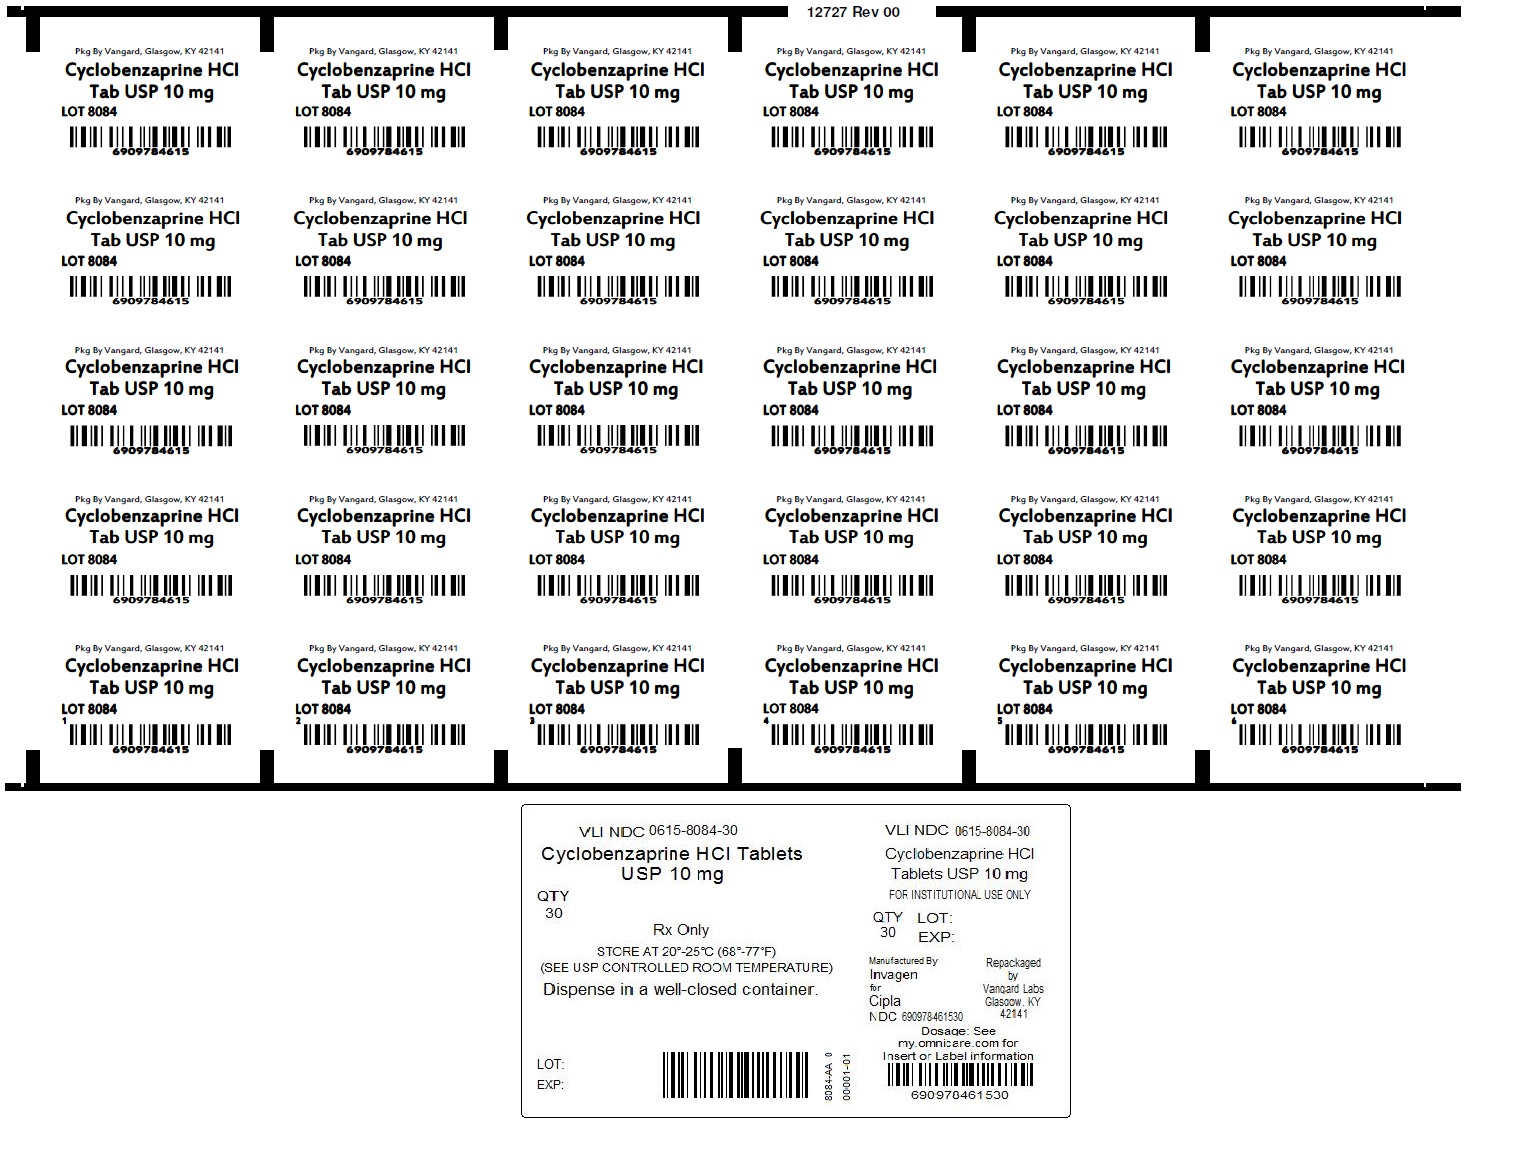 Cyclobenzaprine HCl 10mg unit dose label